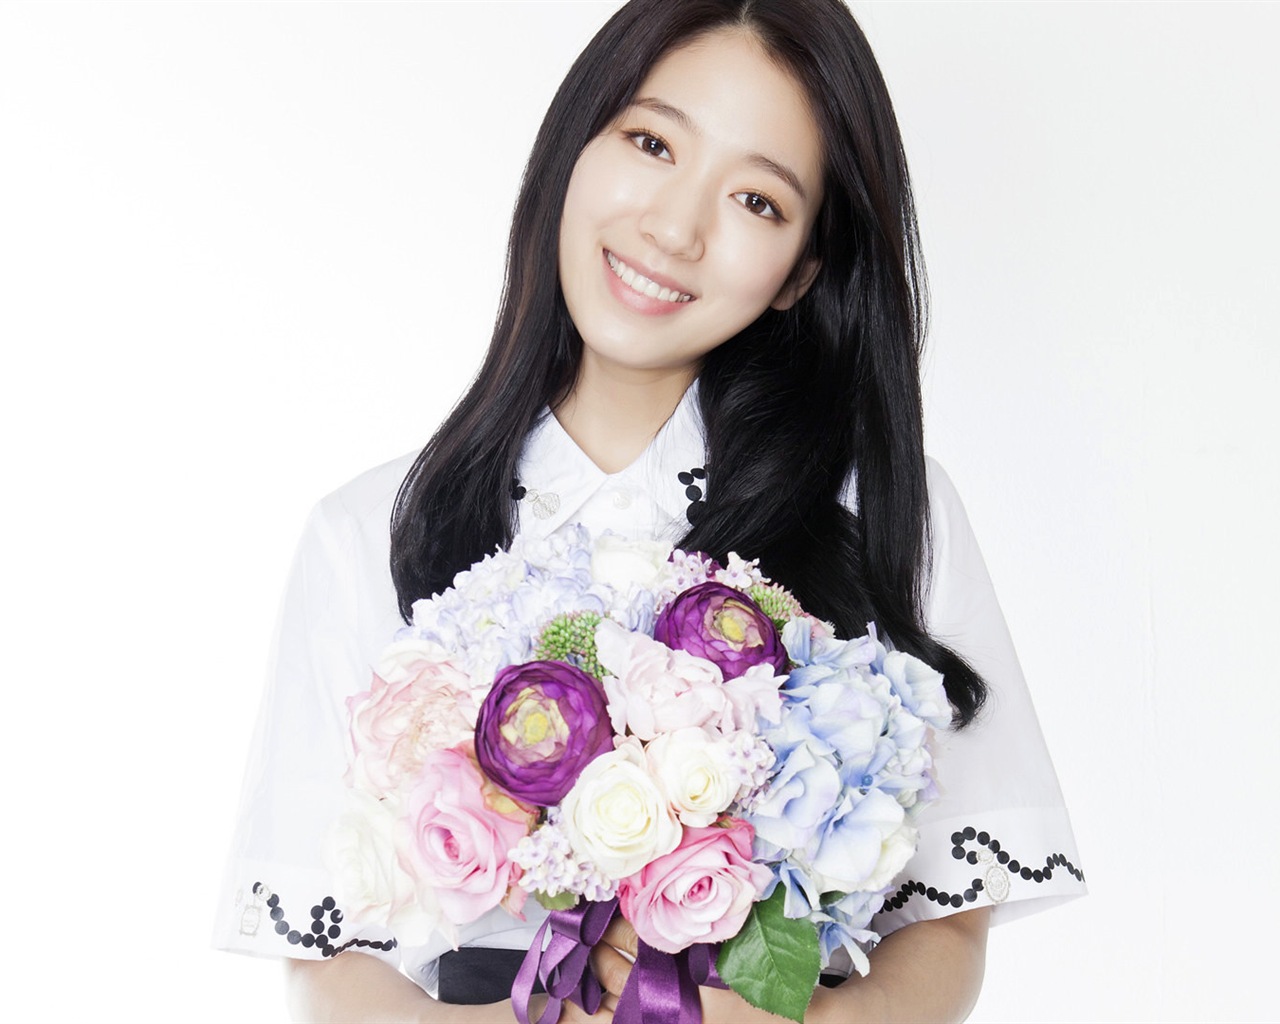 South Korean actress Park Shin Hye HD Wallpapers #12 - 1280x1024